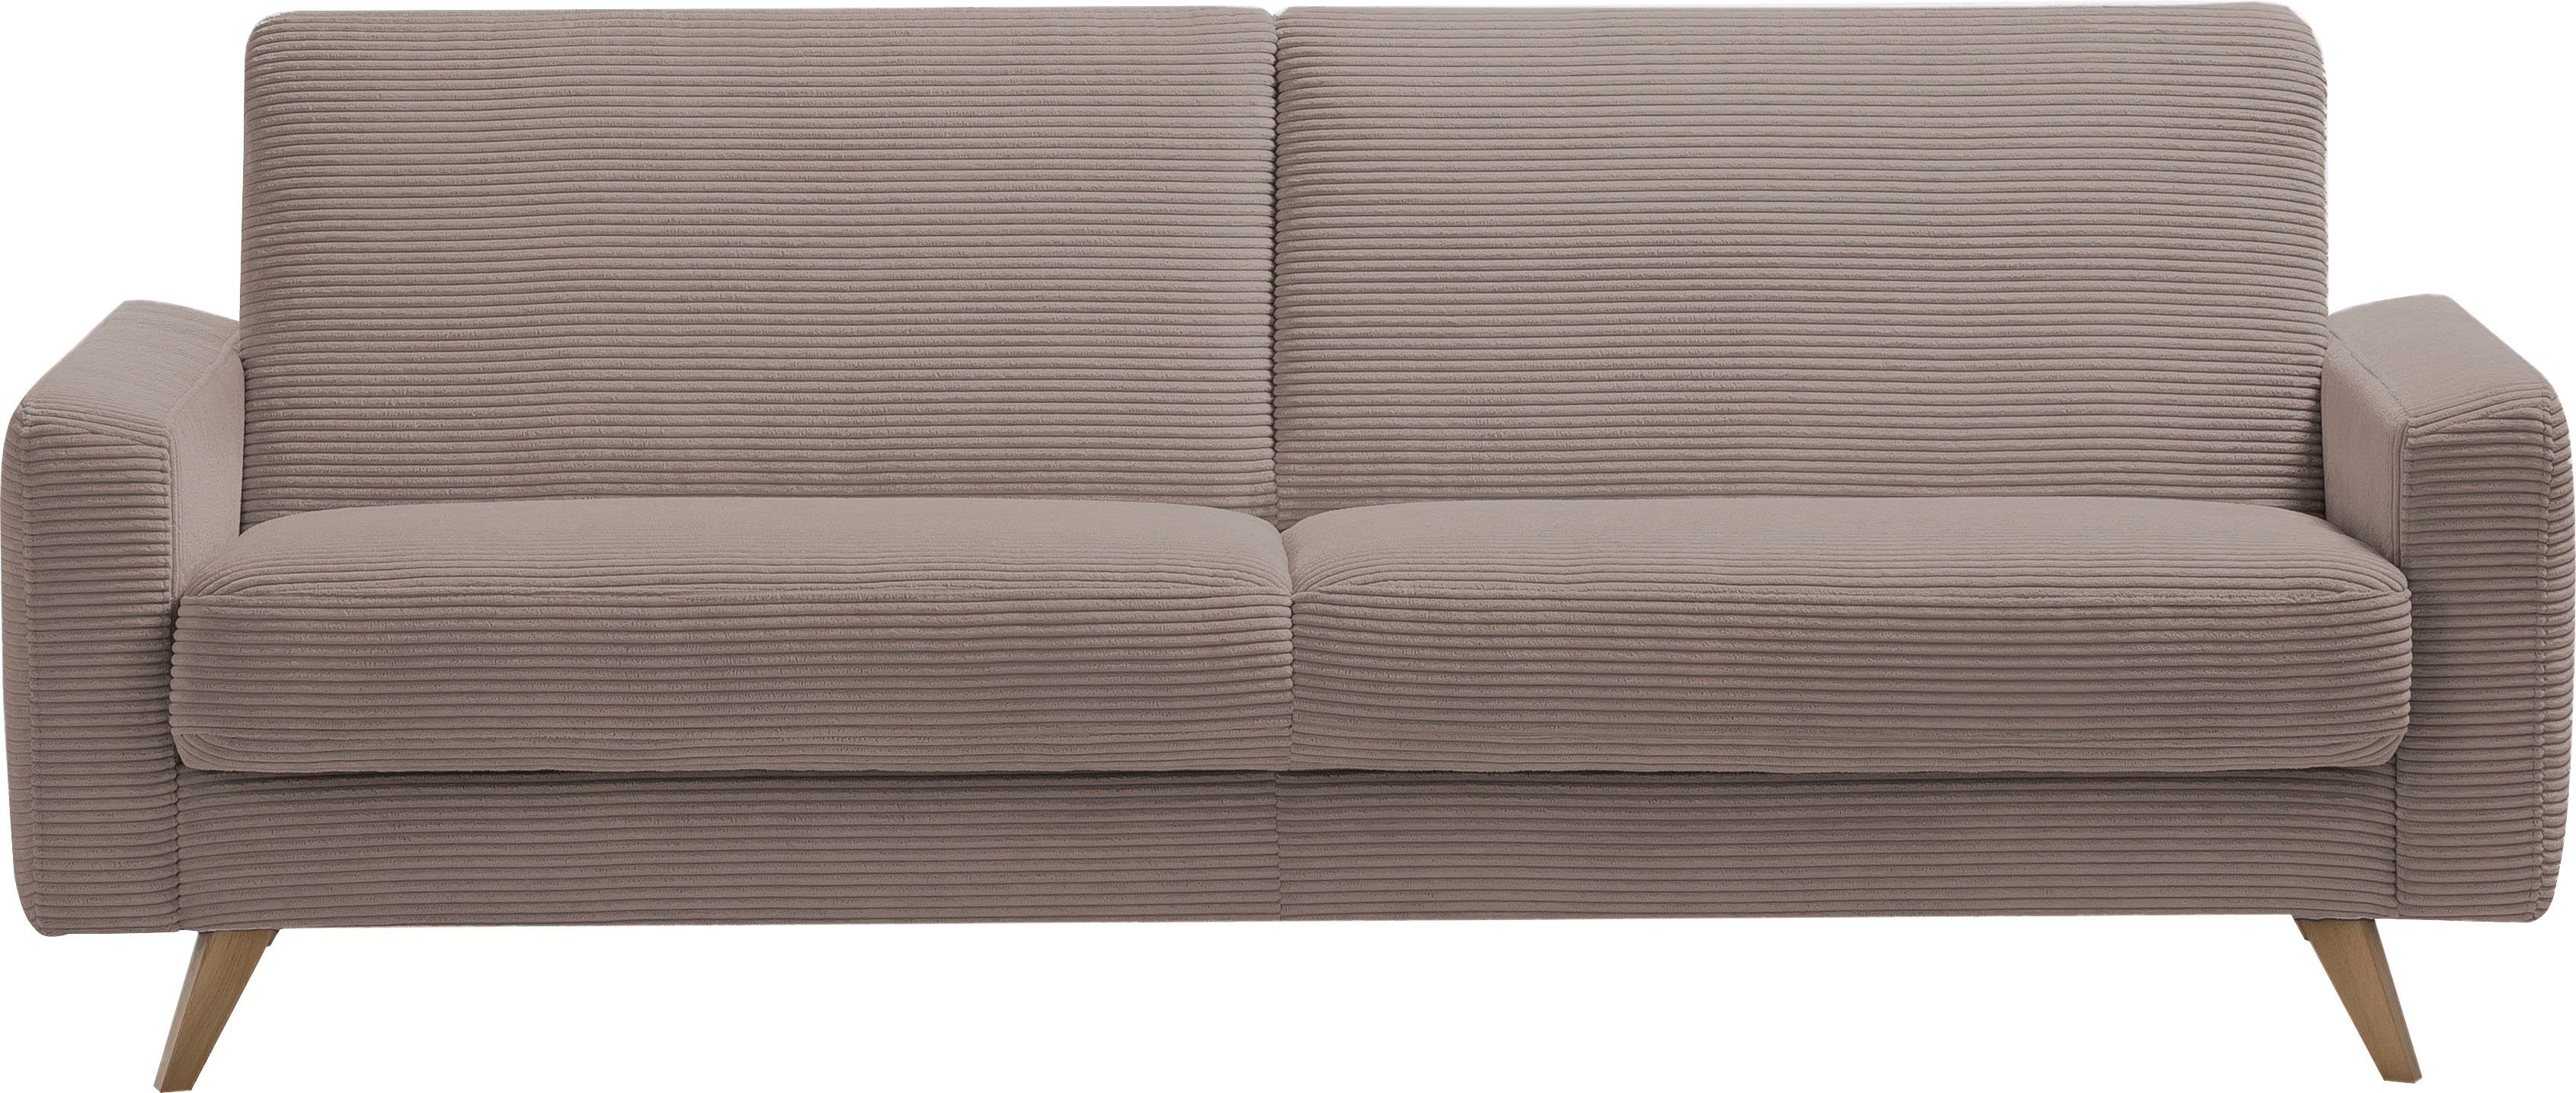 Samso, und Inklusive 3-Sitzer fashion Bettkasten - Bettfunktion cappucino exxpo sofa